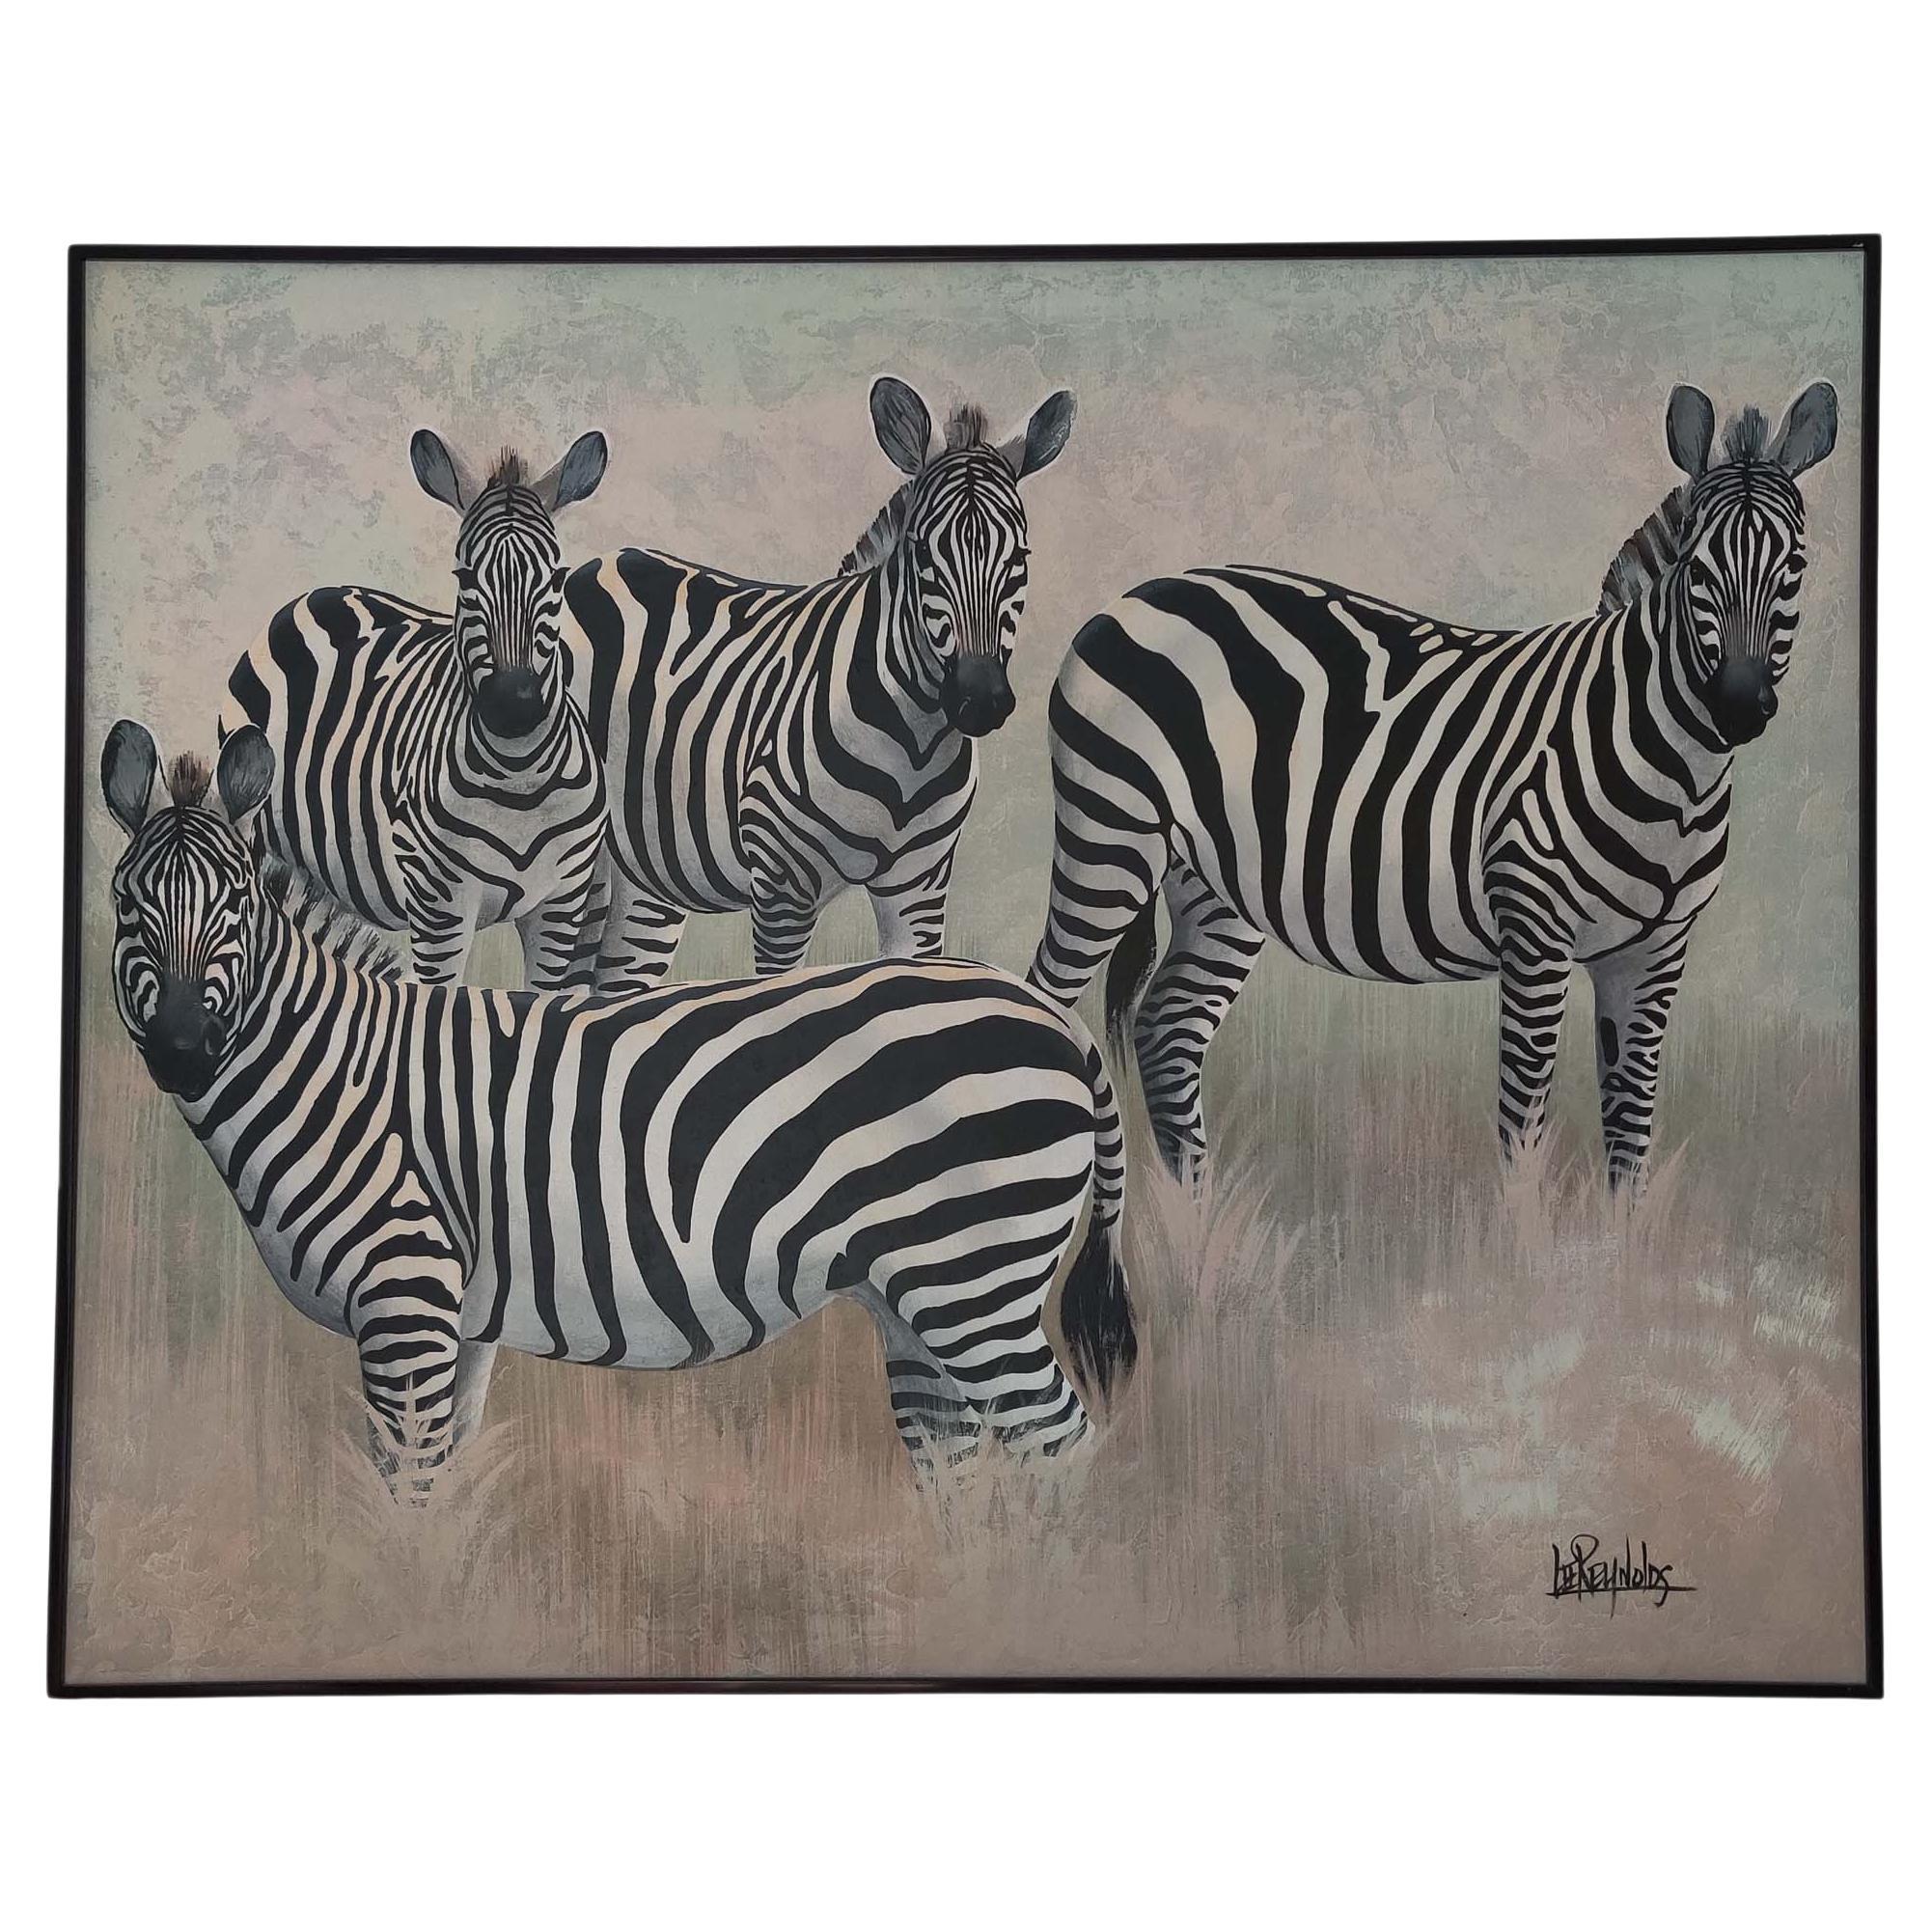 Vintage 1980s Lee Reynolds Oil on Canvas Painting Depicting "A Zeal of Zebras" For Sale